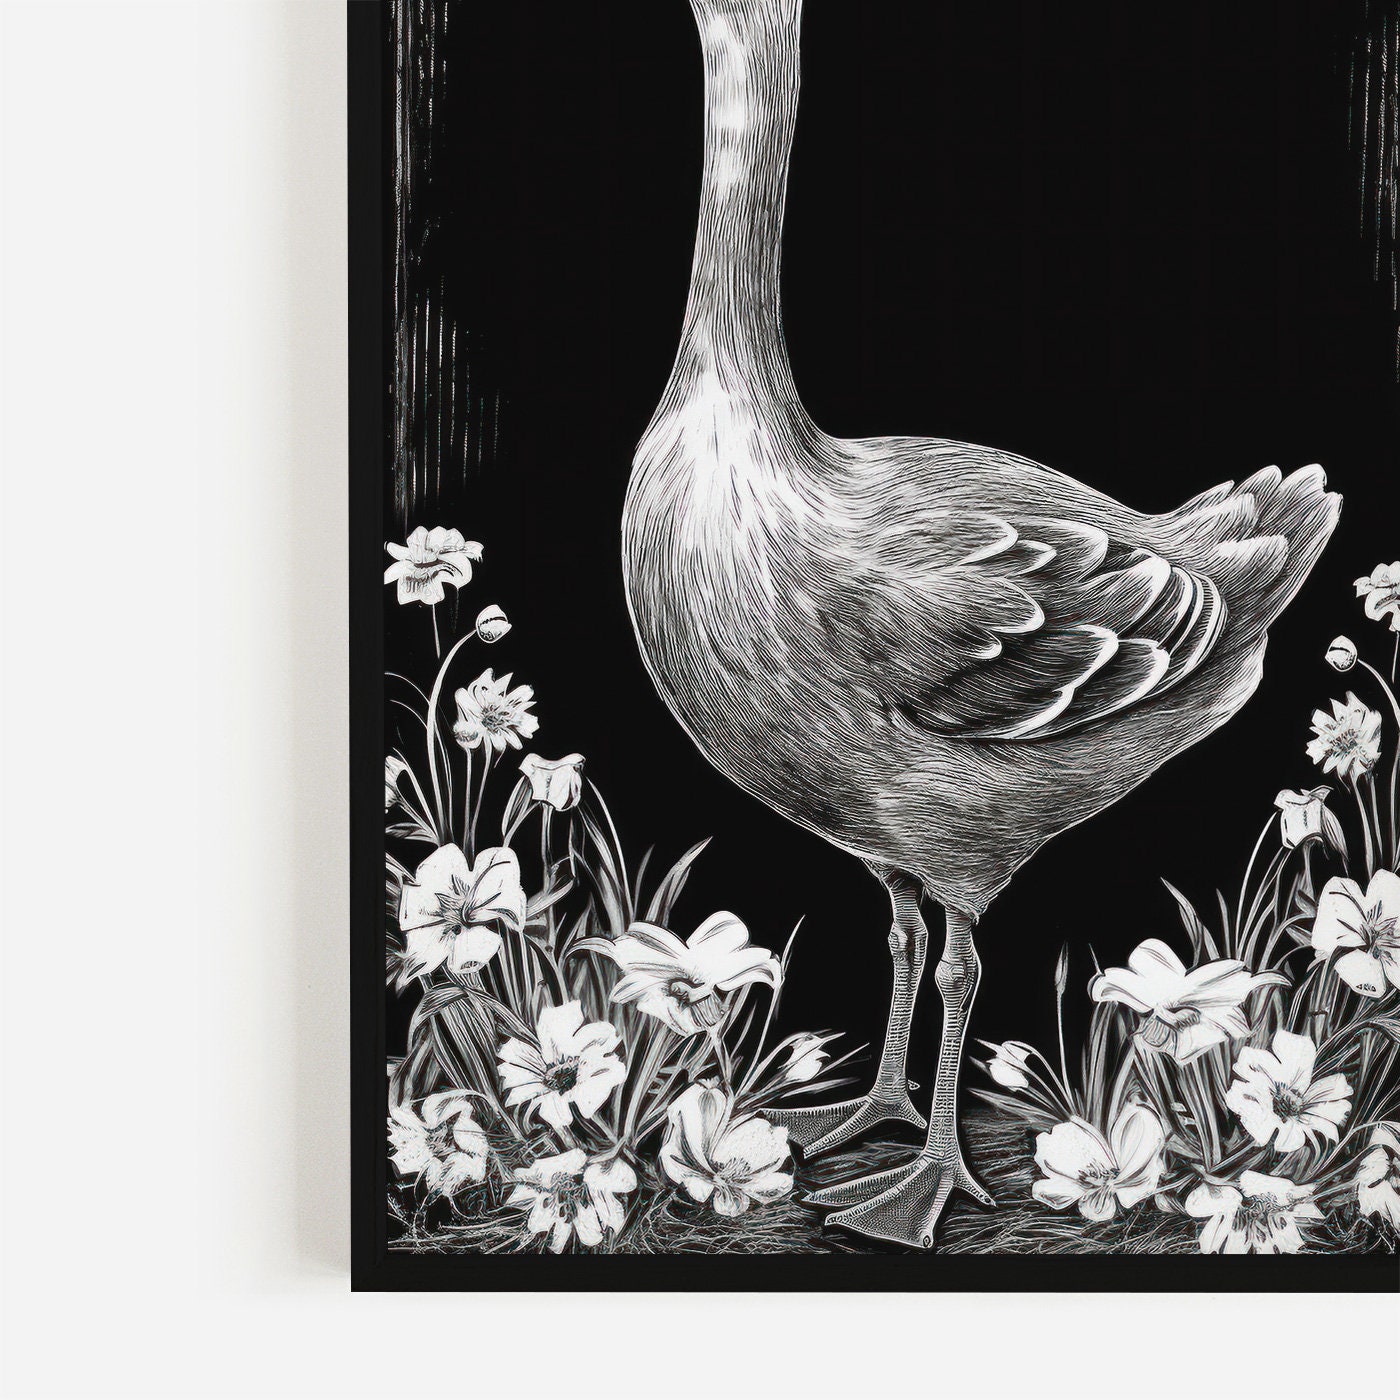 Goose & Florals, Goose Print, Farm Animal Art, Calkboard Wall Art Print, Black and White Line Art, Bird Wall Art, PRINTABLE Wall Decor